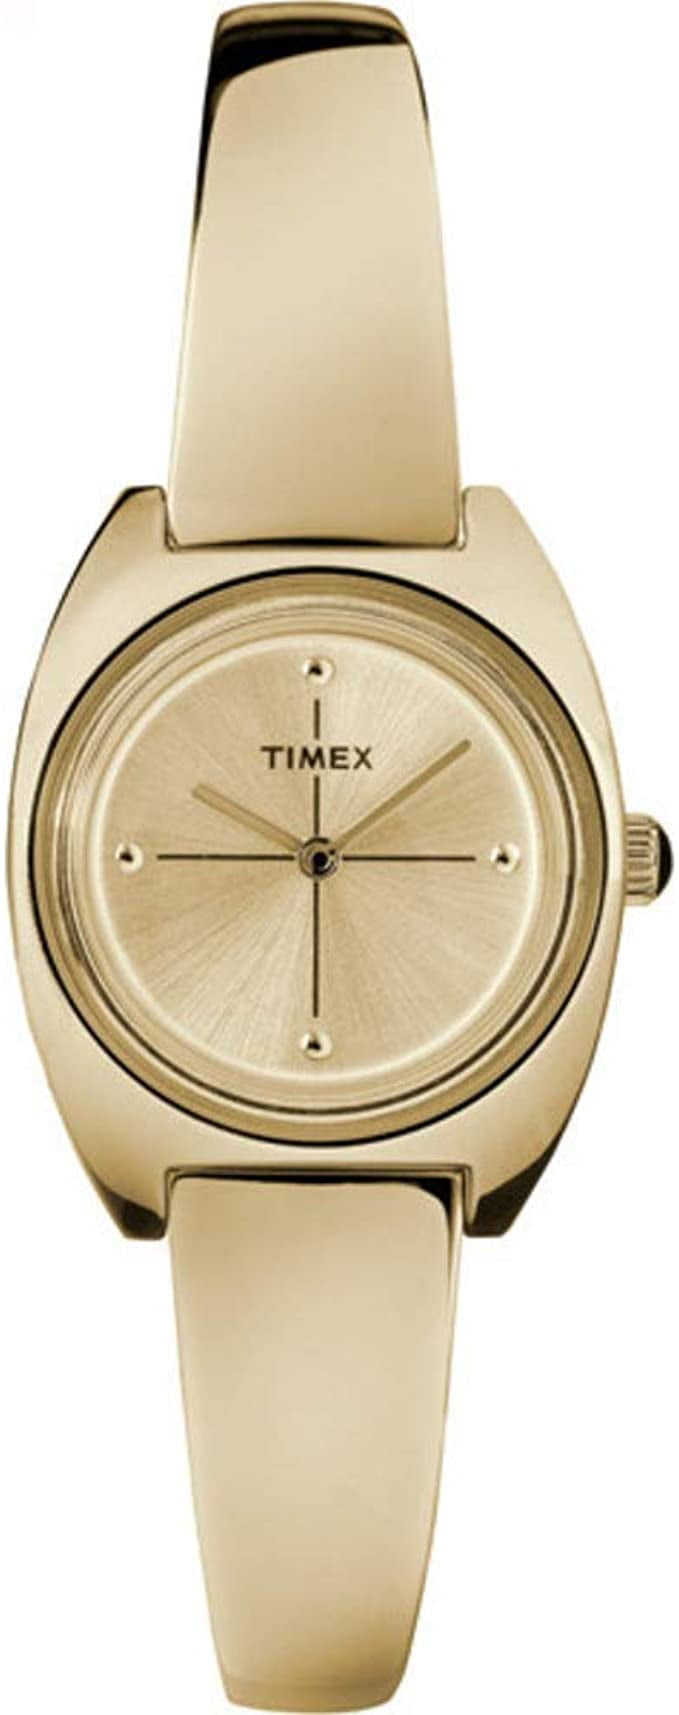 Timex Milano Quartz Movement Gold Dial Ladies Watch TW2R70000